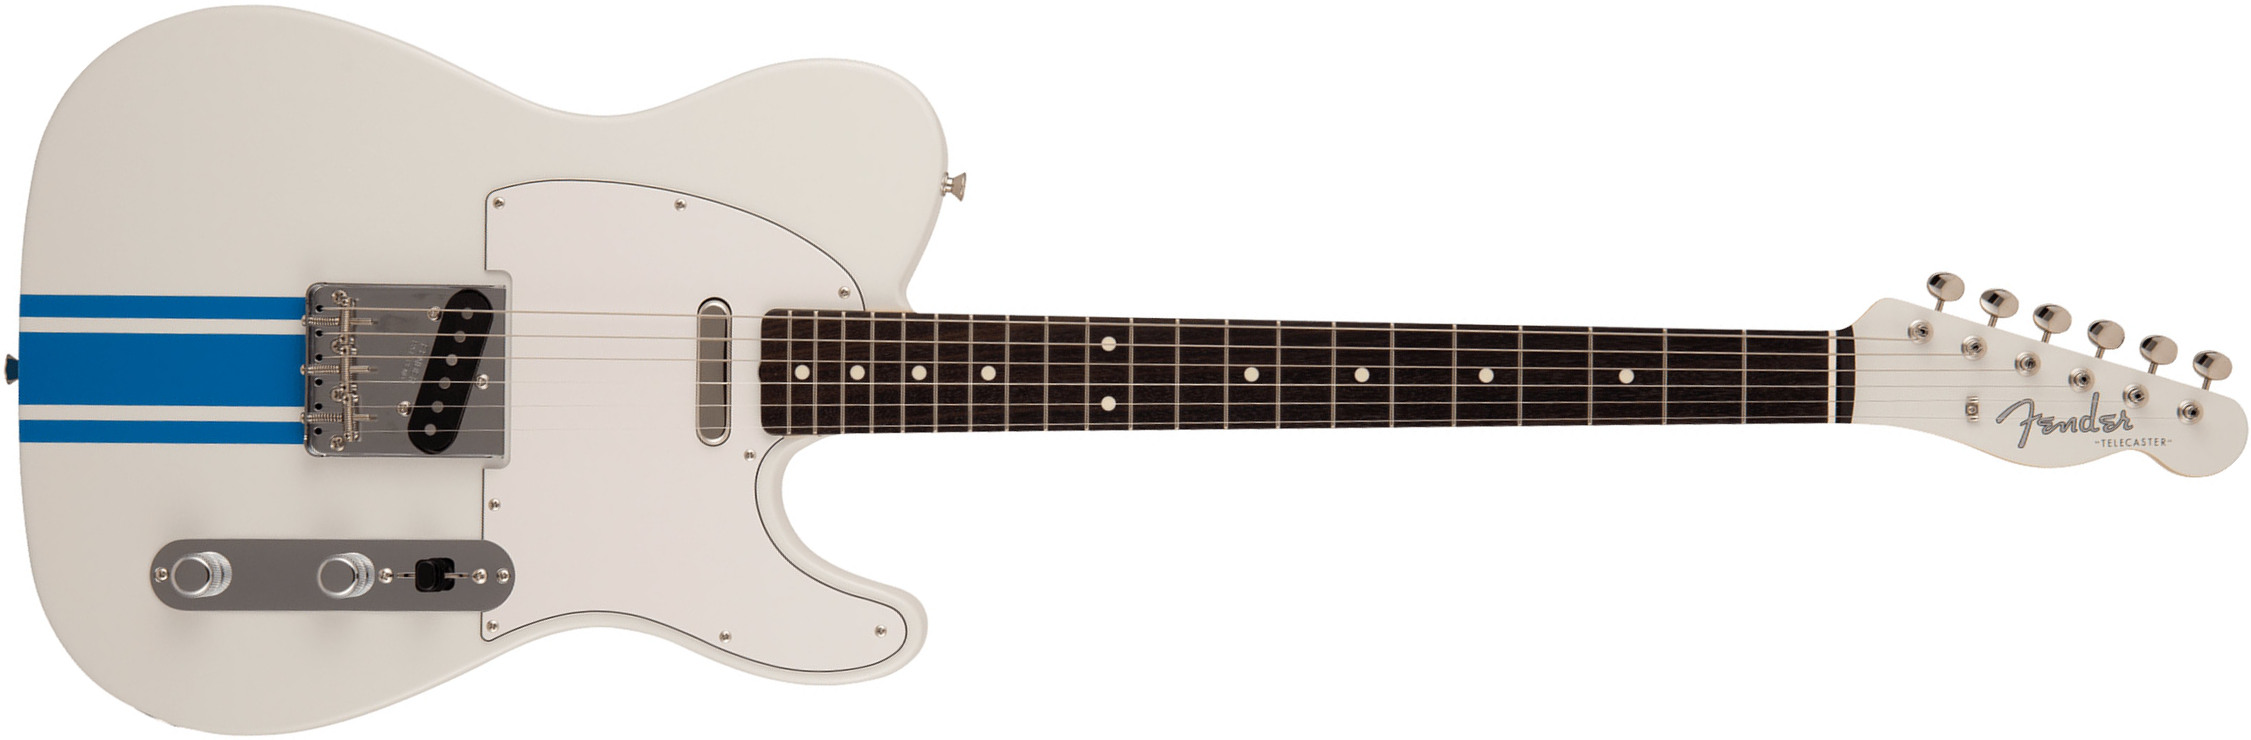 Fender Tele Traditional 60s Mij Jap 2s Ht Rw - Olympic White W/ Blue Competition Stripe - Televorm elektrische gitaar - Main picture